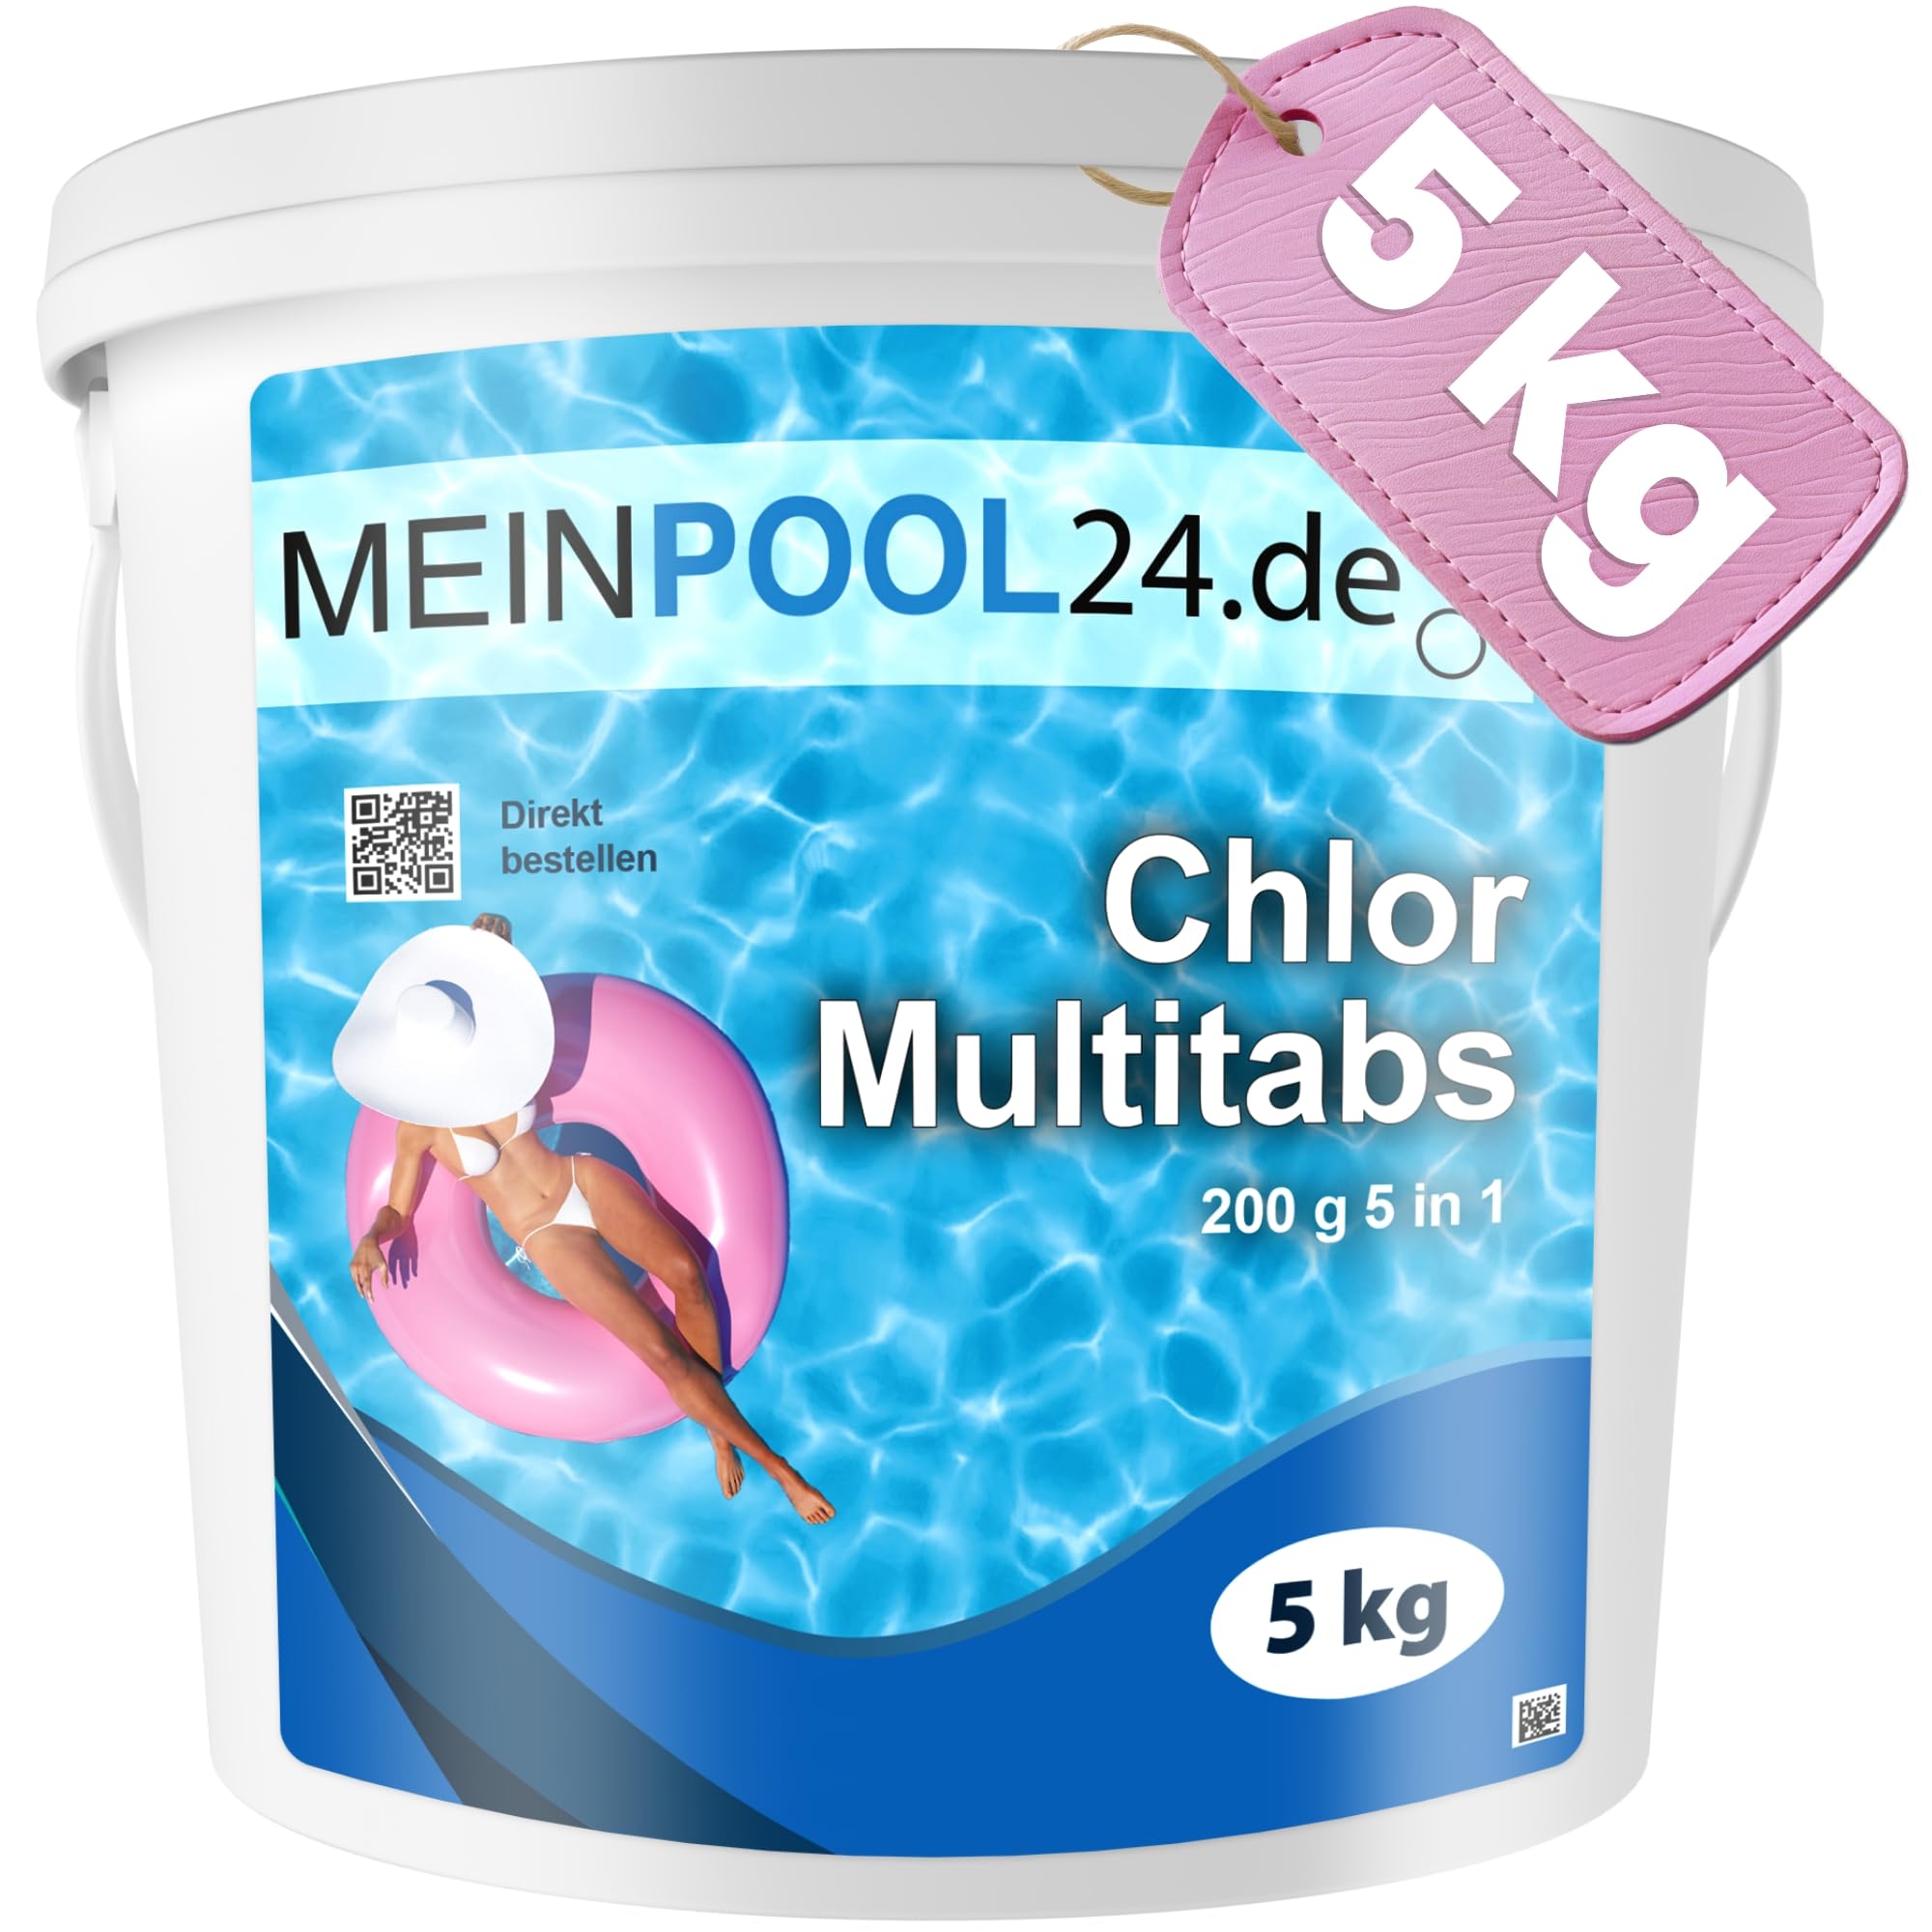 5 kg MEINPOOL24.DE CHLORMULTITABS CHLOR MULTITABS 5 IN 1, 200 g TABS Multifunktionstabletten